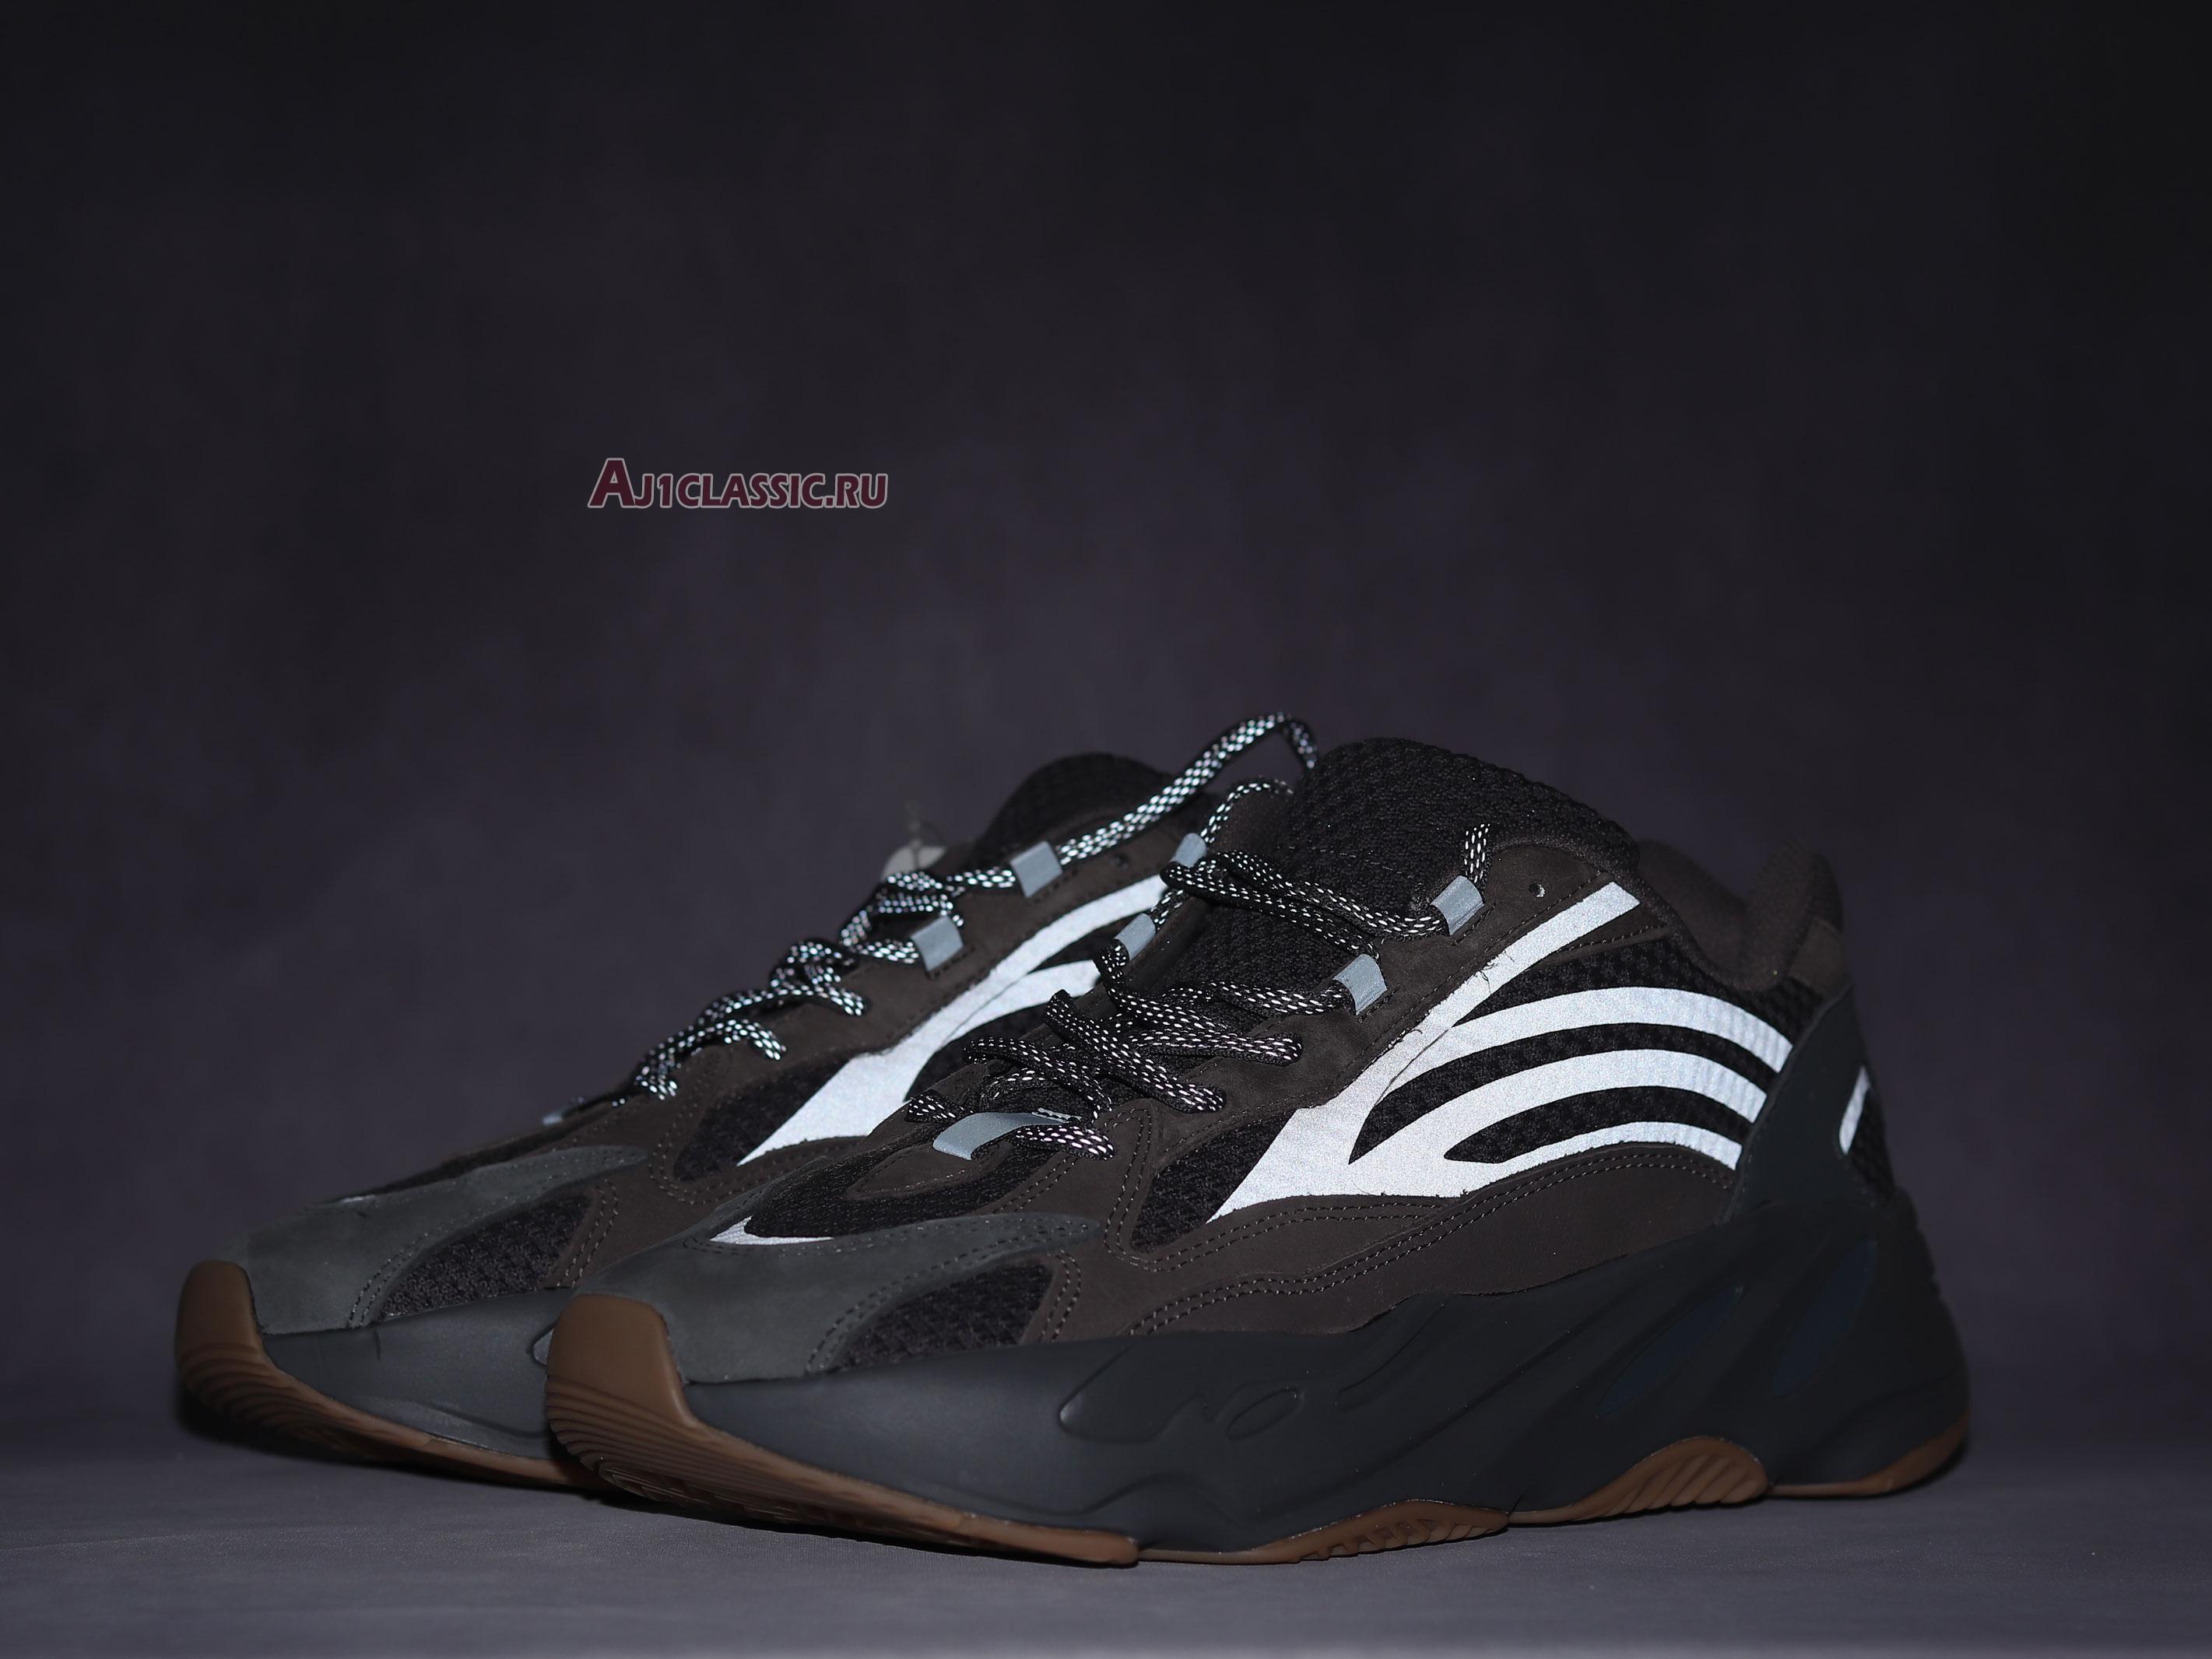 Adidas Yeezy Boost 700 V2 "Geode" GE6860